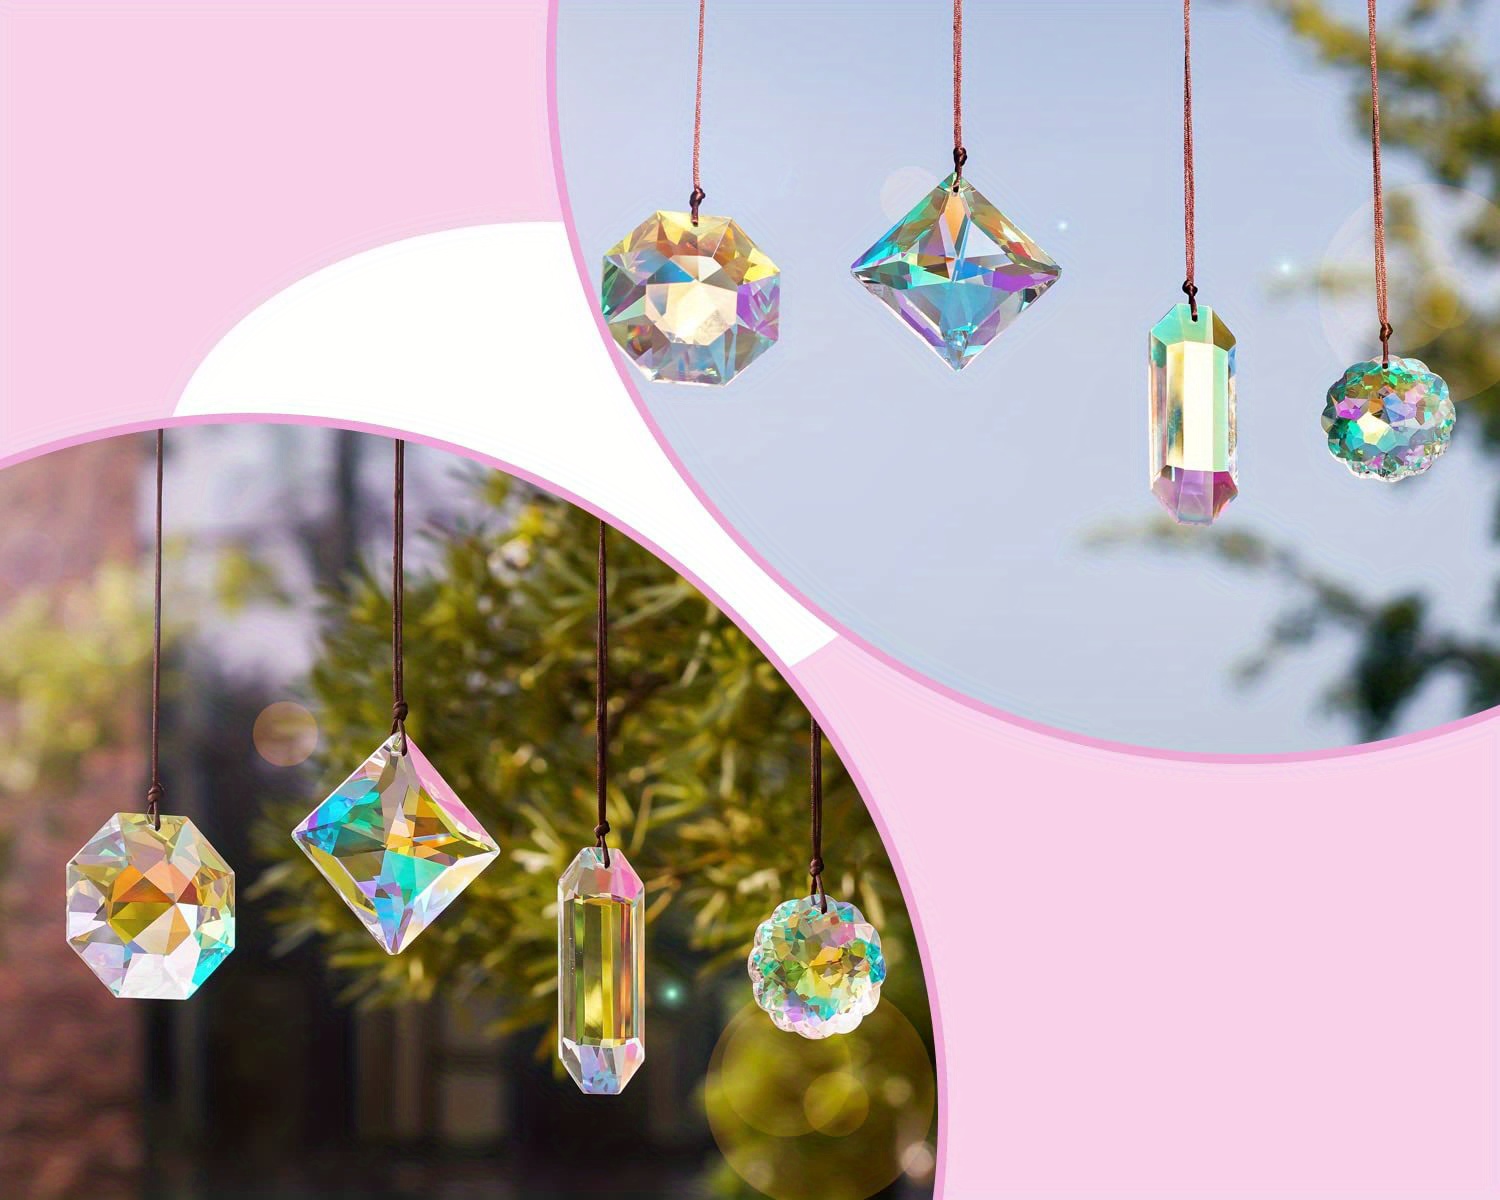 cueiha Colorful Multi-Sided Heart Shape Suncatcher 3D Hanging Prisms  Decoration Dream Catcher for Home Office Garden Decoration Crystal Glass  Suncatcher Ornament Rainbow Maker 